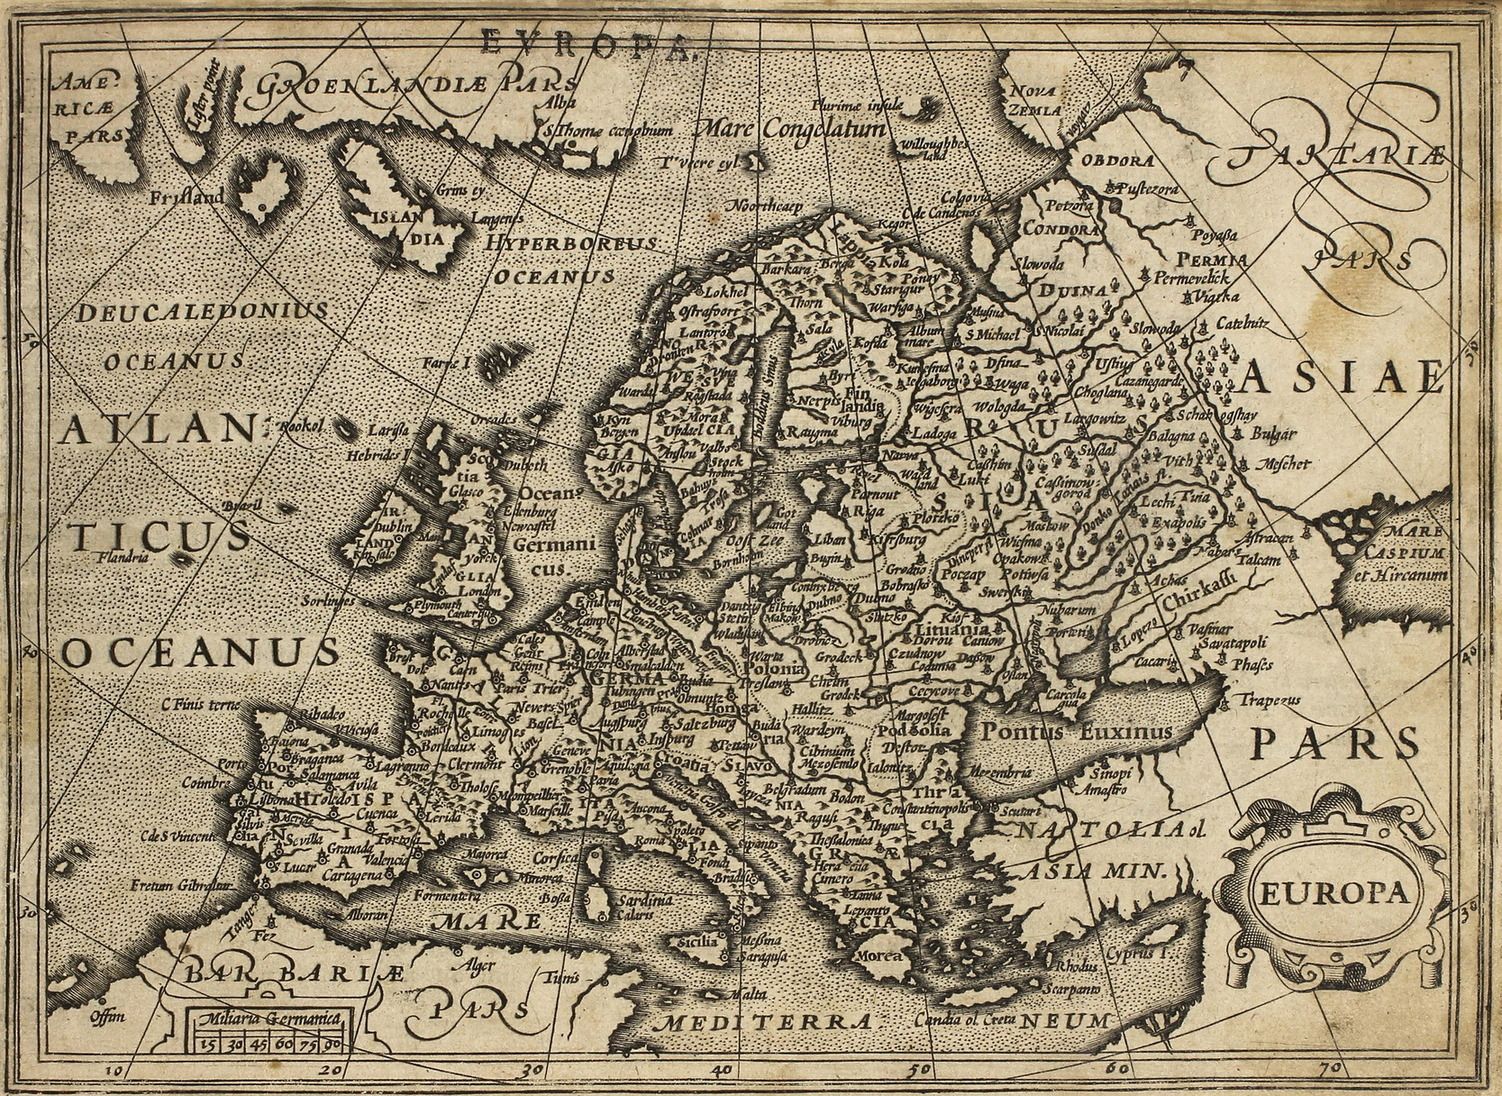 Atlas Minor by Gerard Mercator and Jodocus Hondius 1607